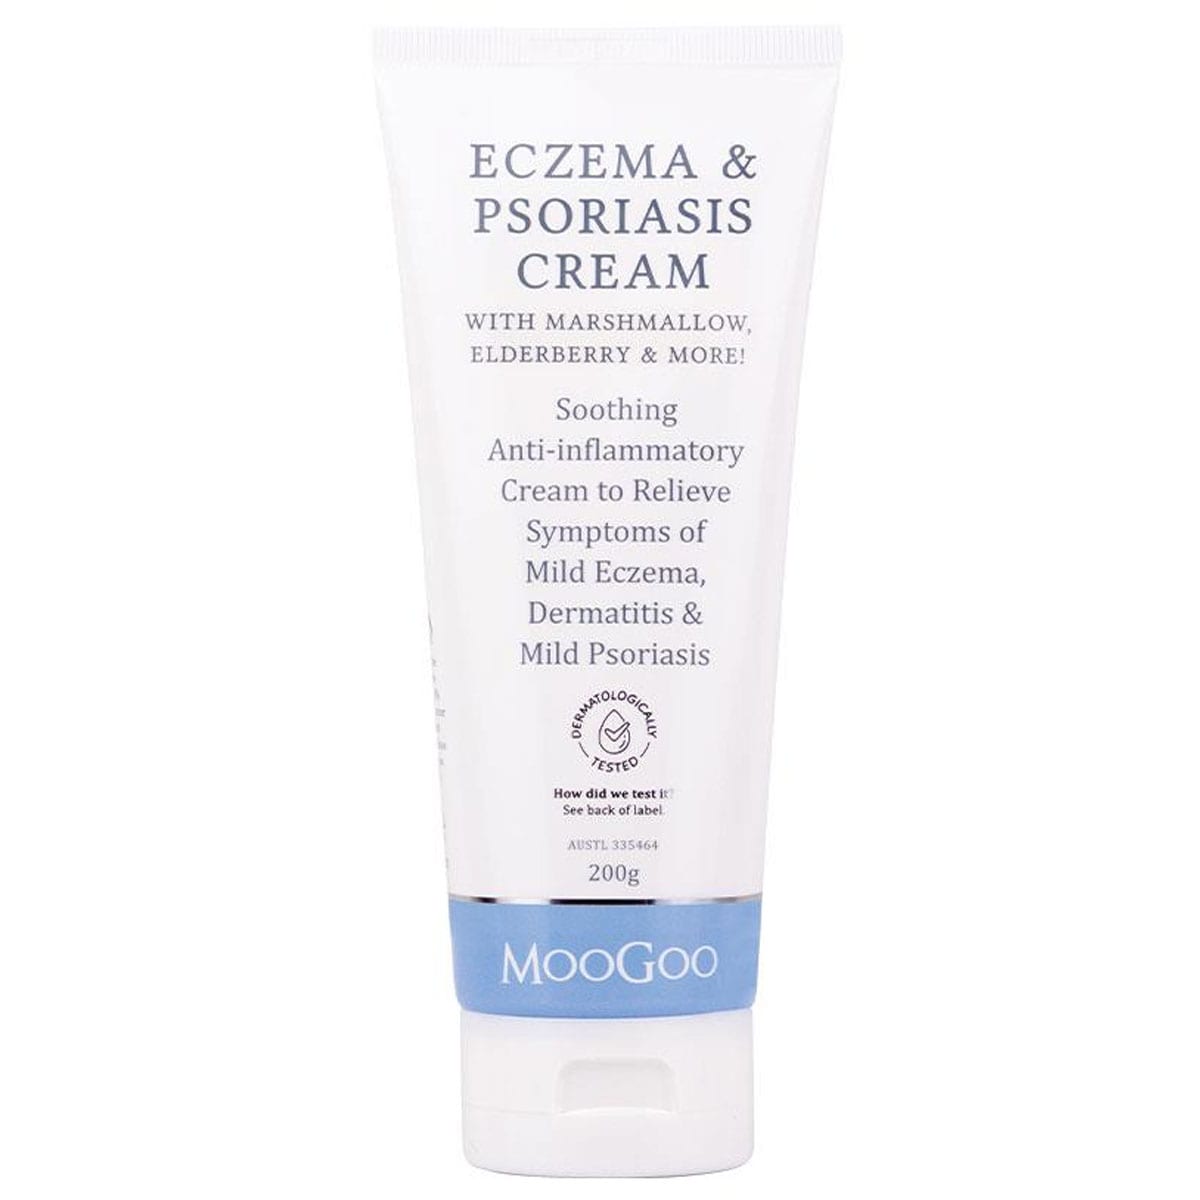 MooGoo Eczema & Psoriasis Cream with Marshmallow Elderberry 200g